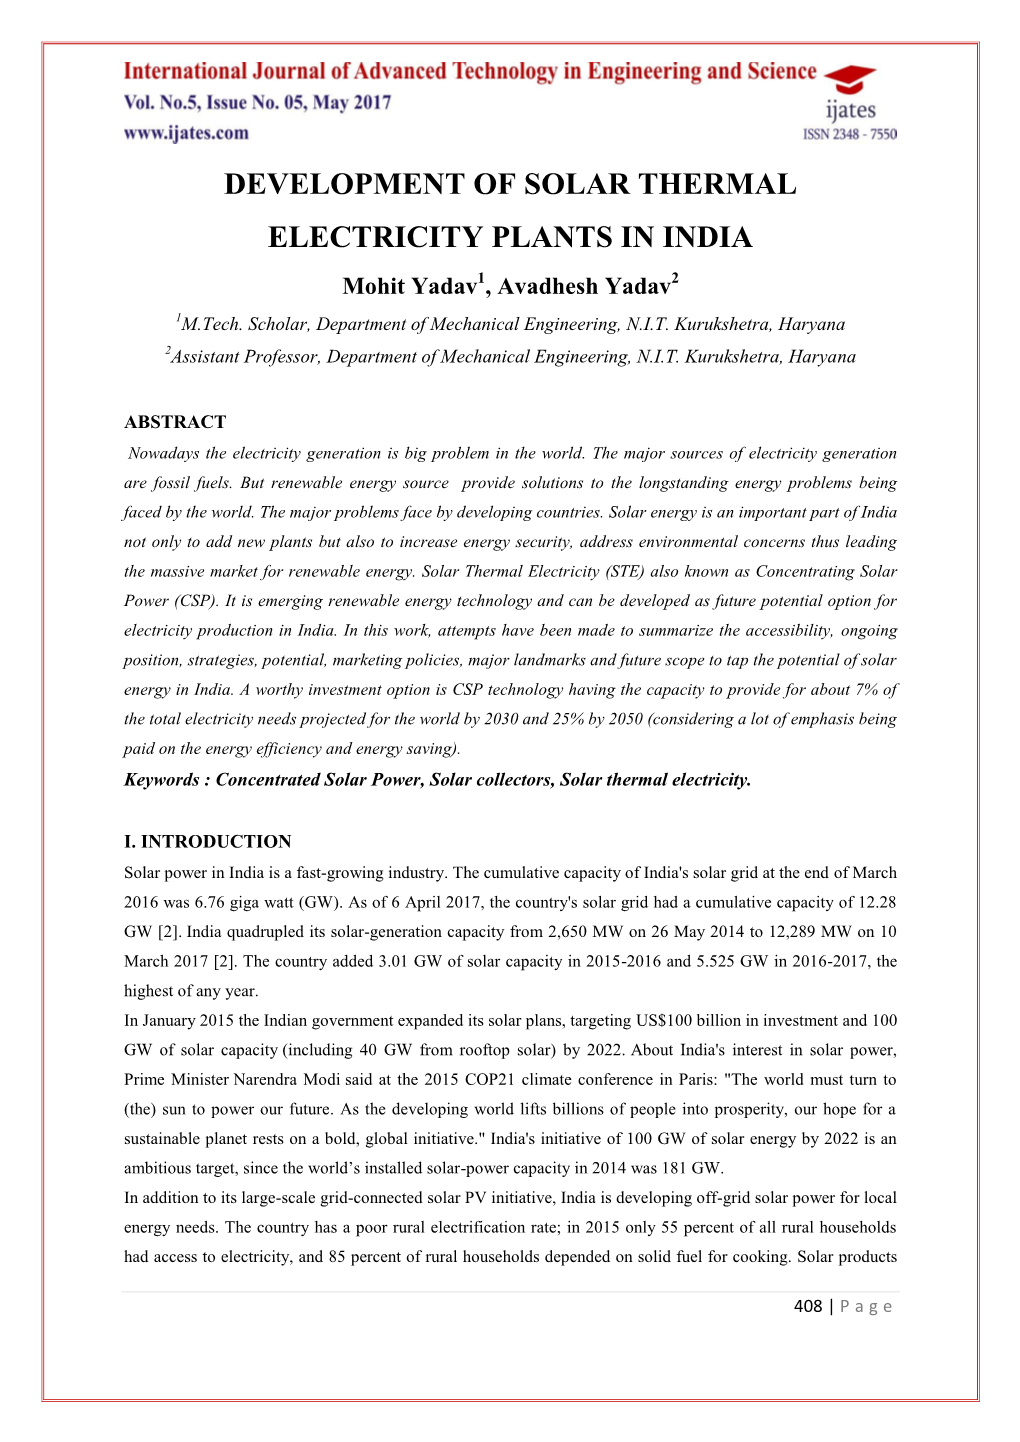 DEVELOPMENT of SOLAR THERMAL ELECTRICITY PLANTS in INDIA Mohit Yadav1, Avadhesh Yadav2 1M.Tech